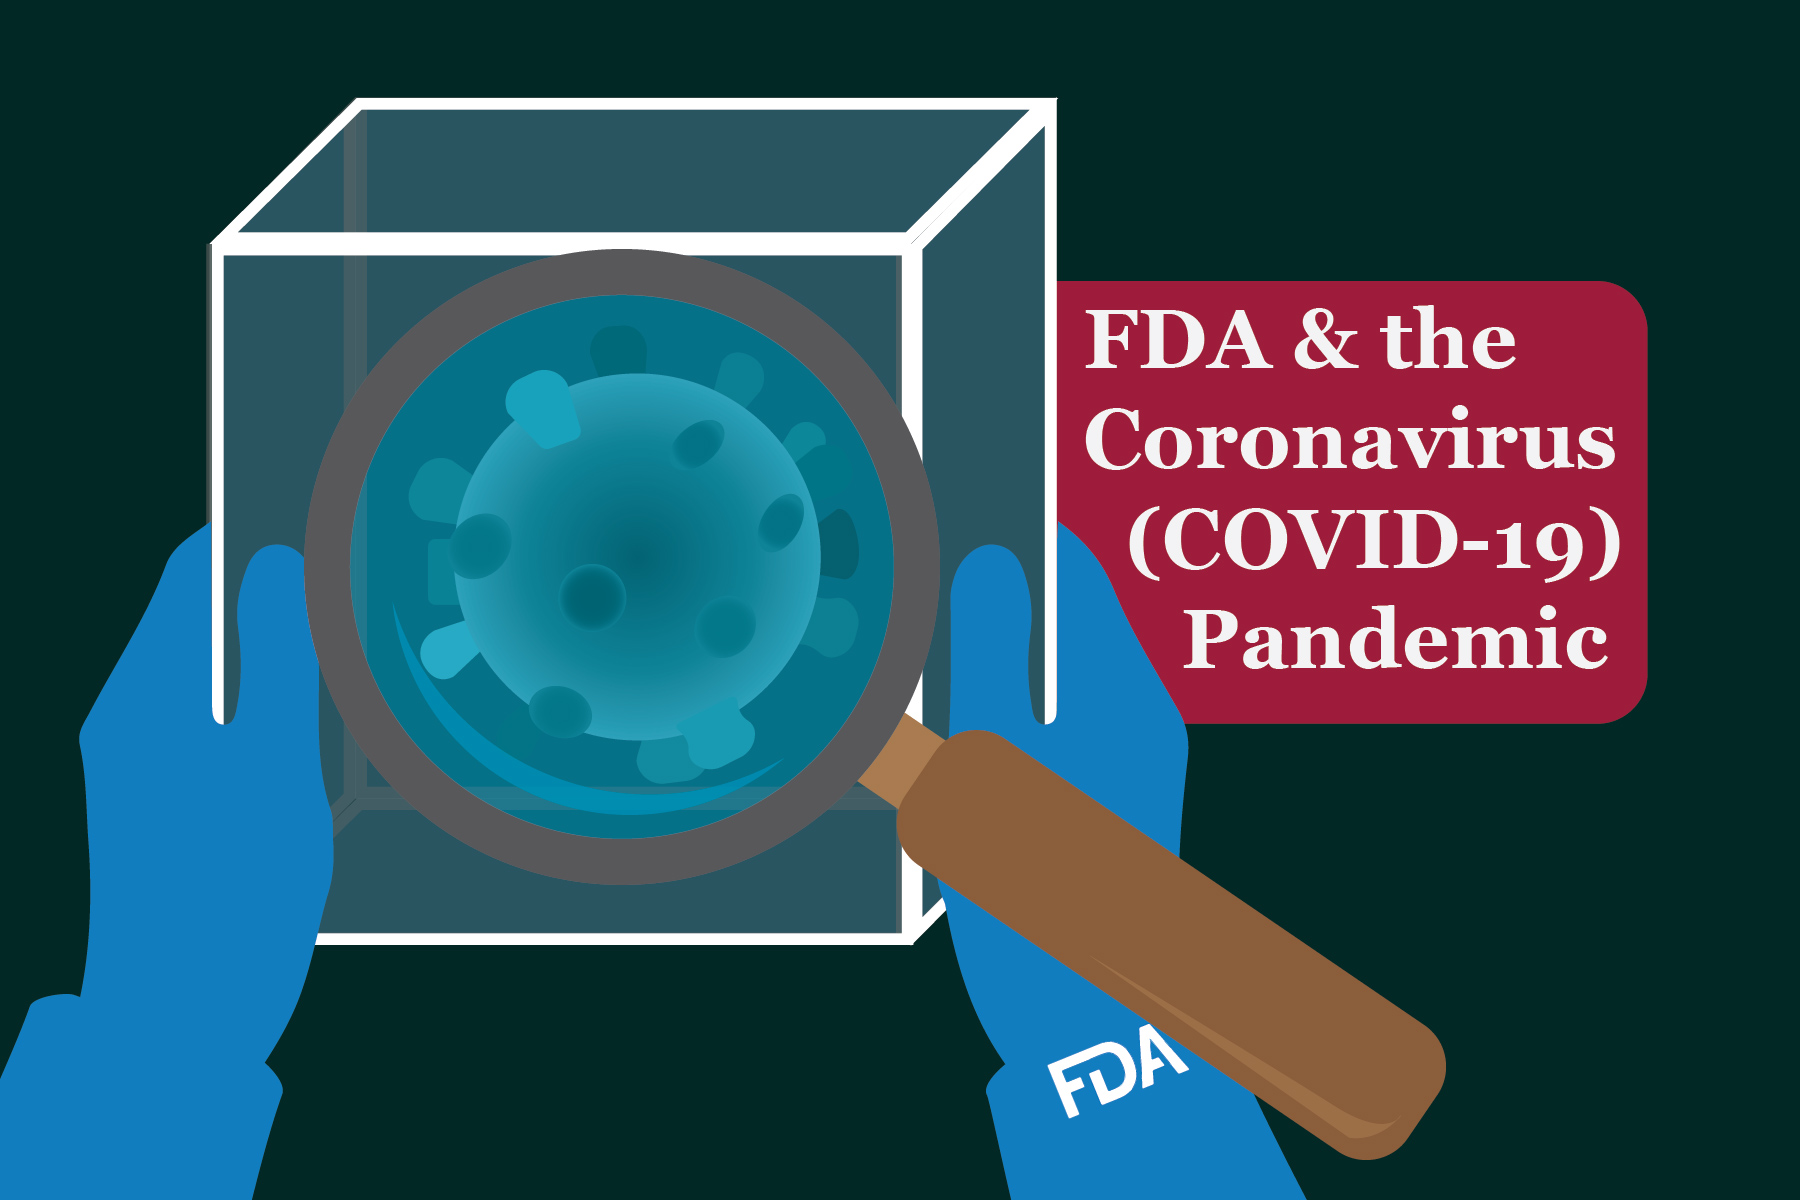 FDA & the Coronavirus (COVID-19) Pandemic